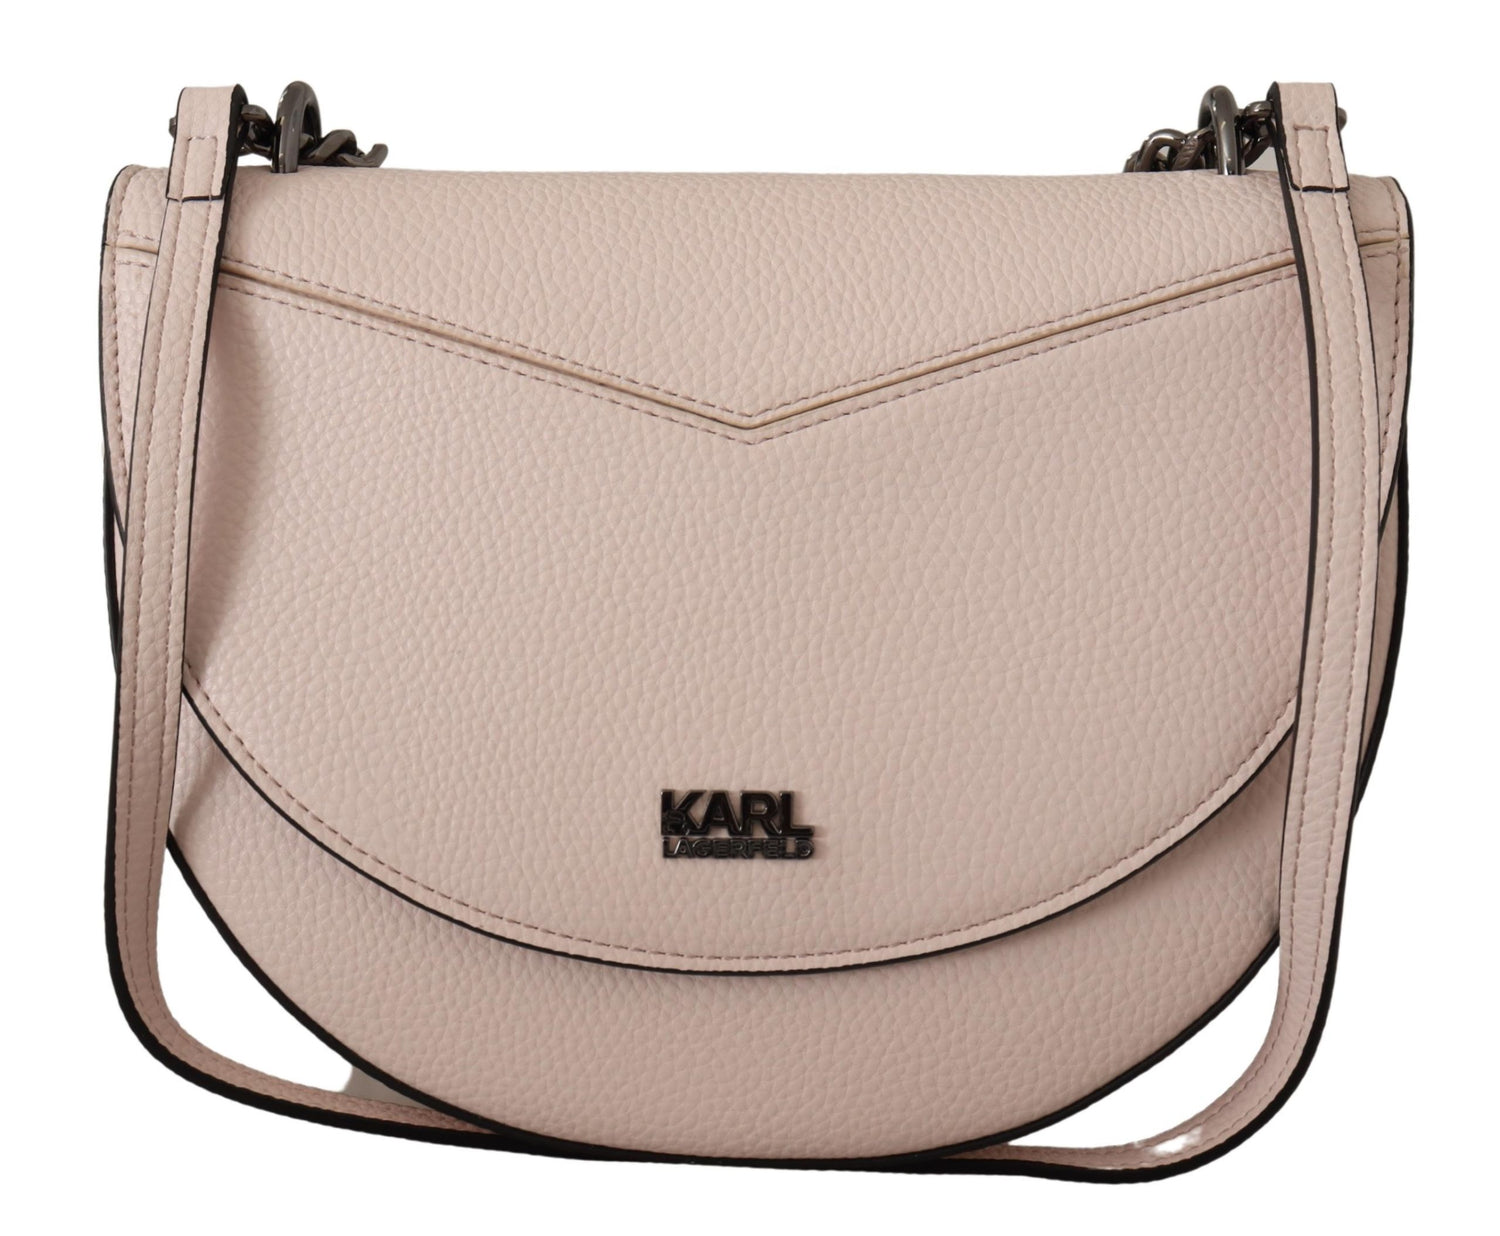 Buy Karl Lagerfeld Bags South Africa